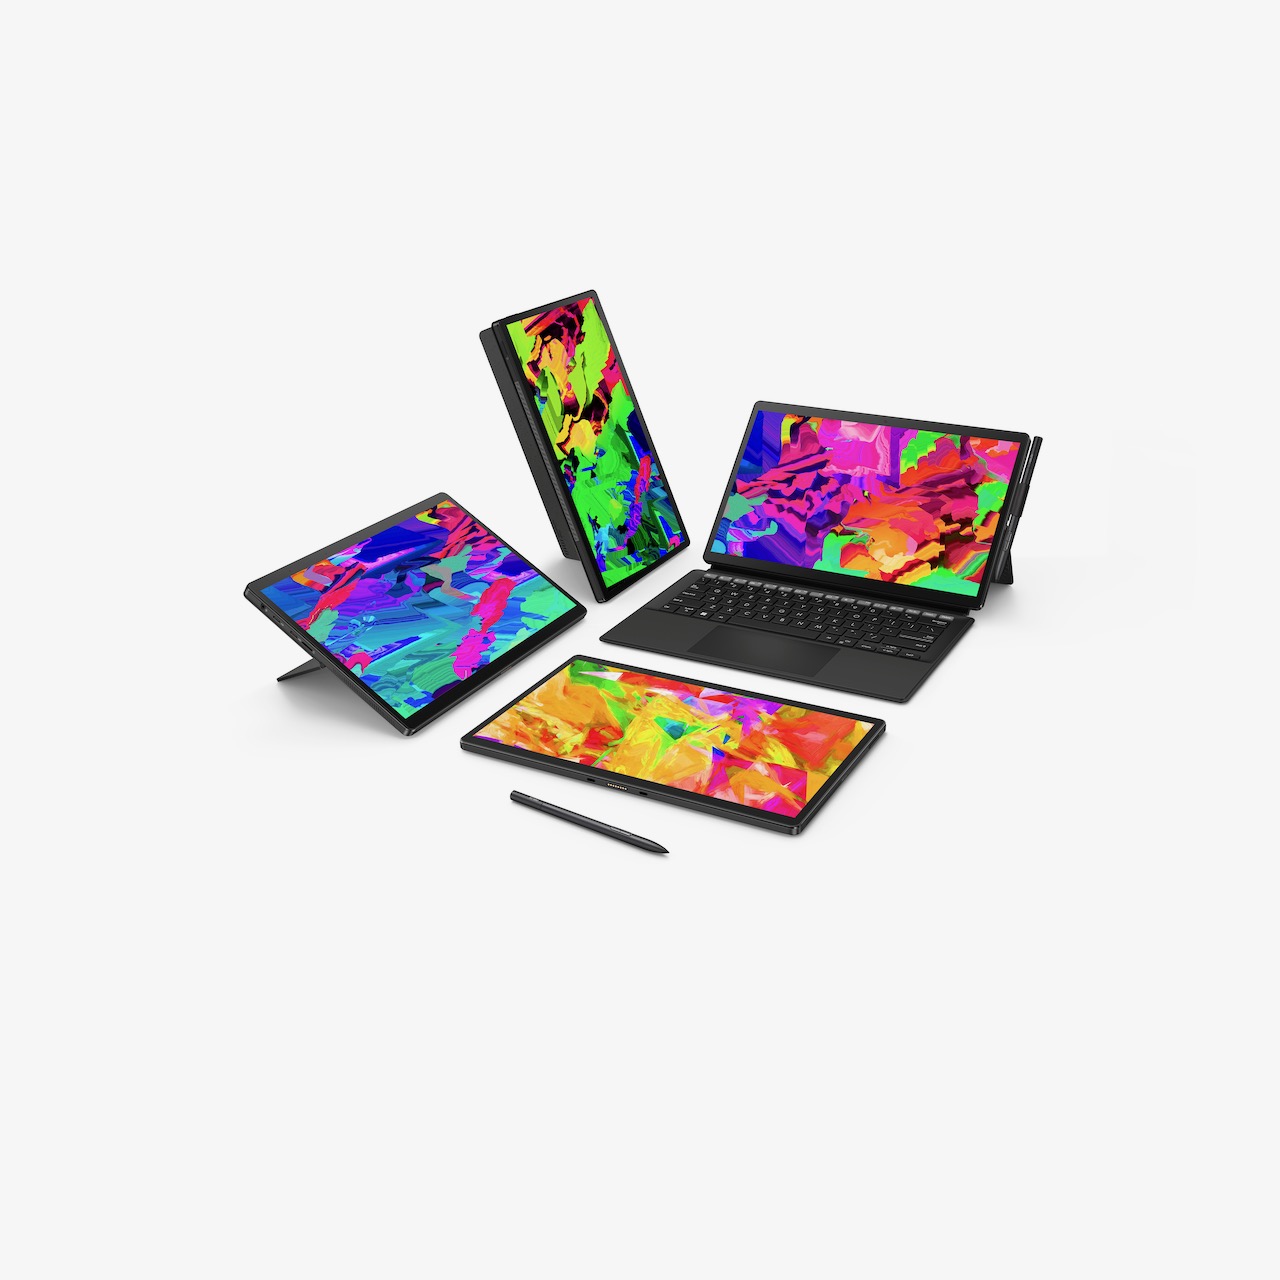 ASUS announced Vivobook 13 Slate OLED